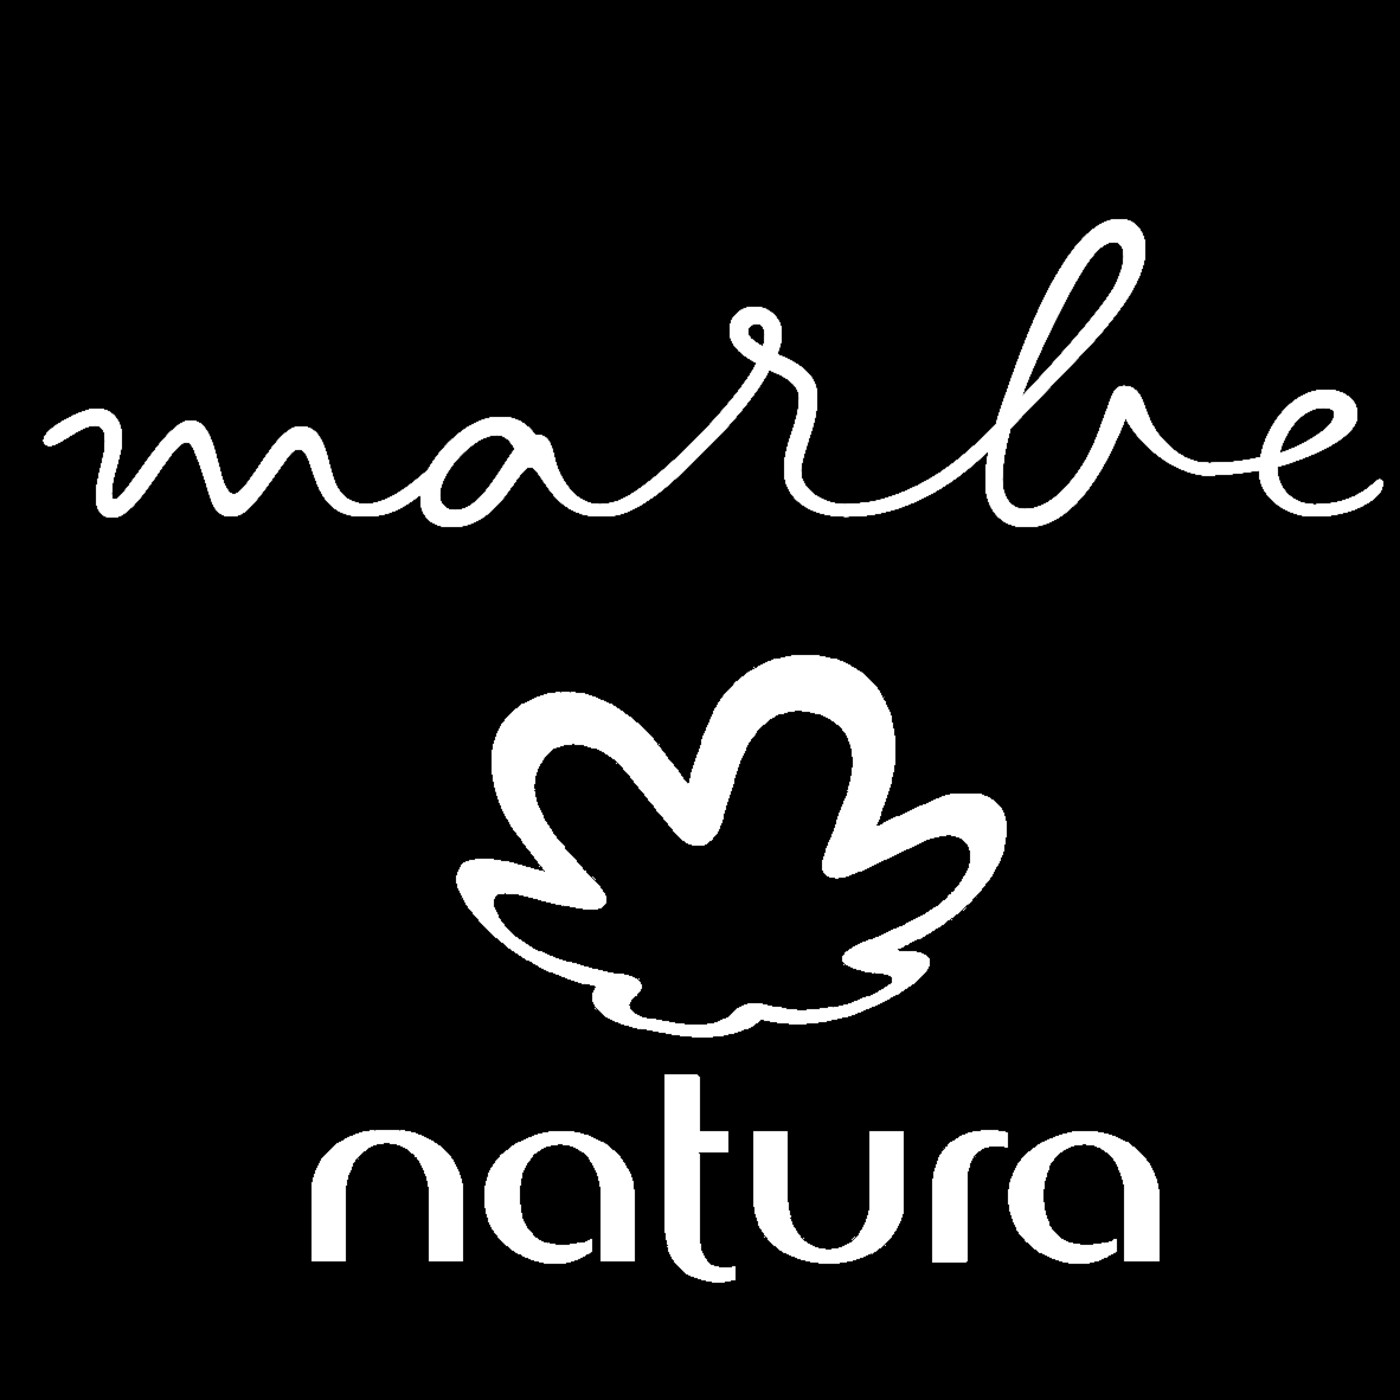 Marbe Natura - Podcast en iVoox